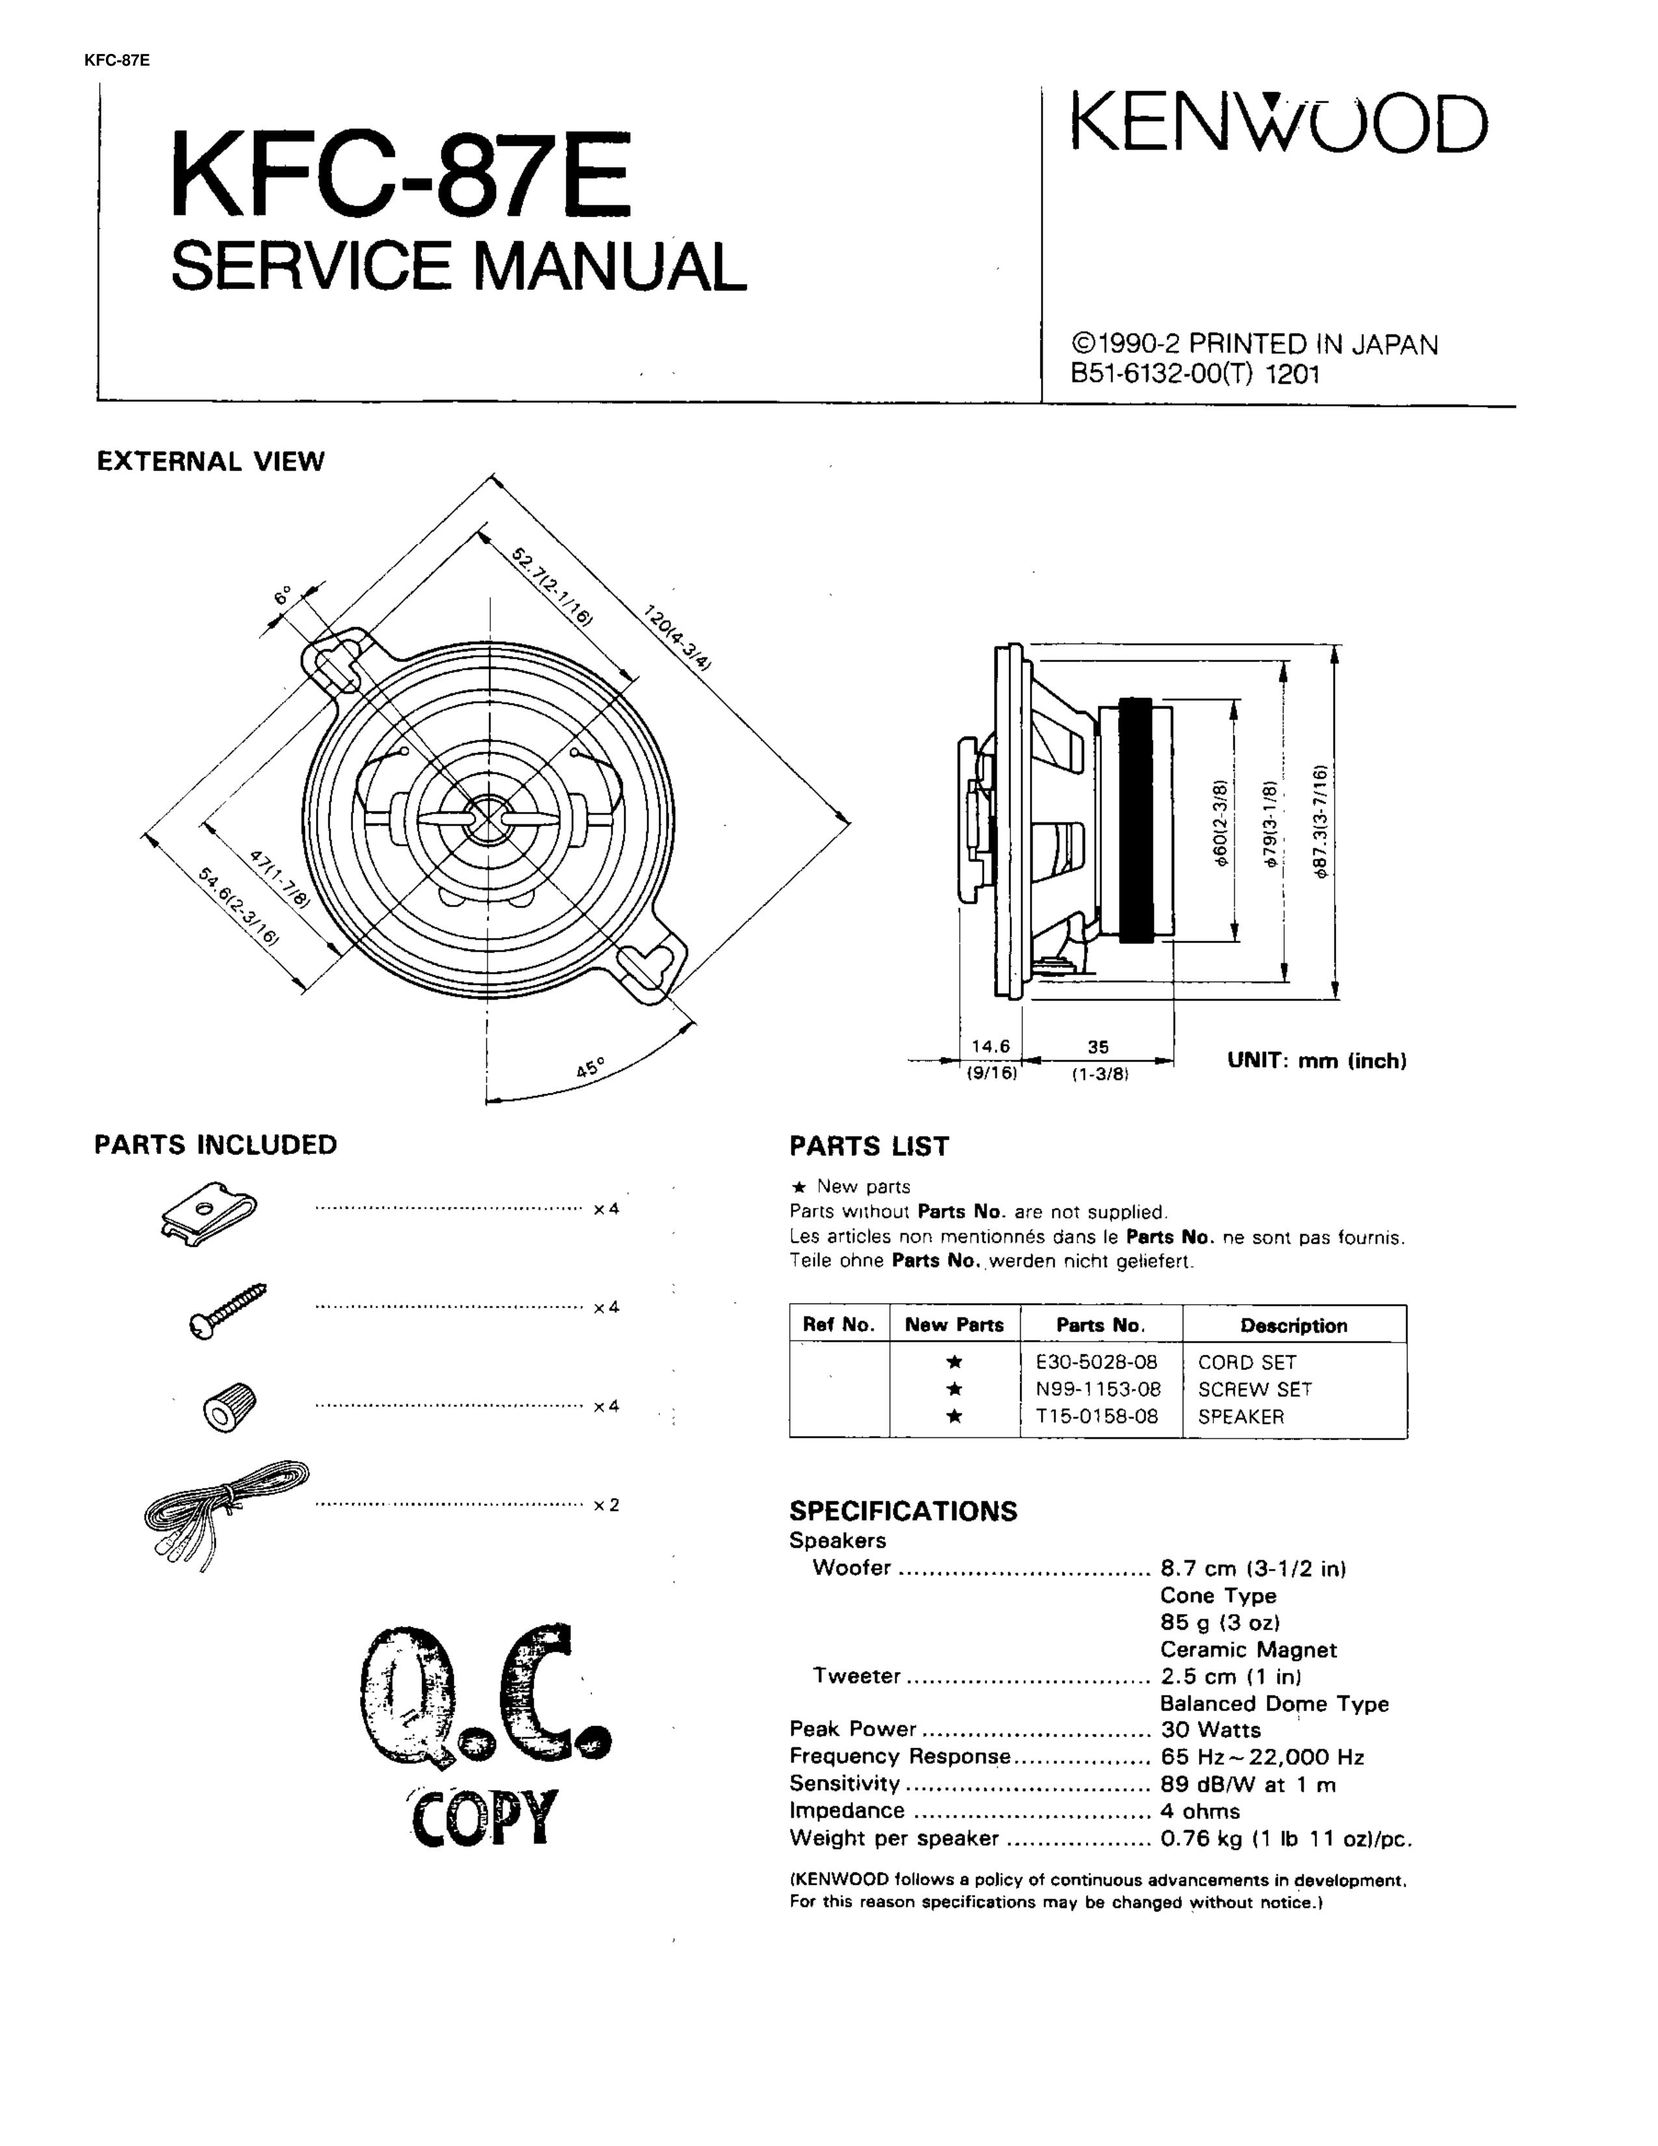 Kenwood KFC-87E Speaker User Manual